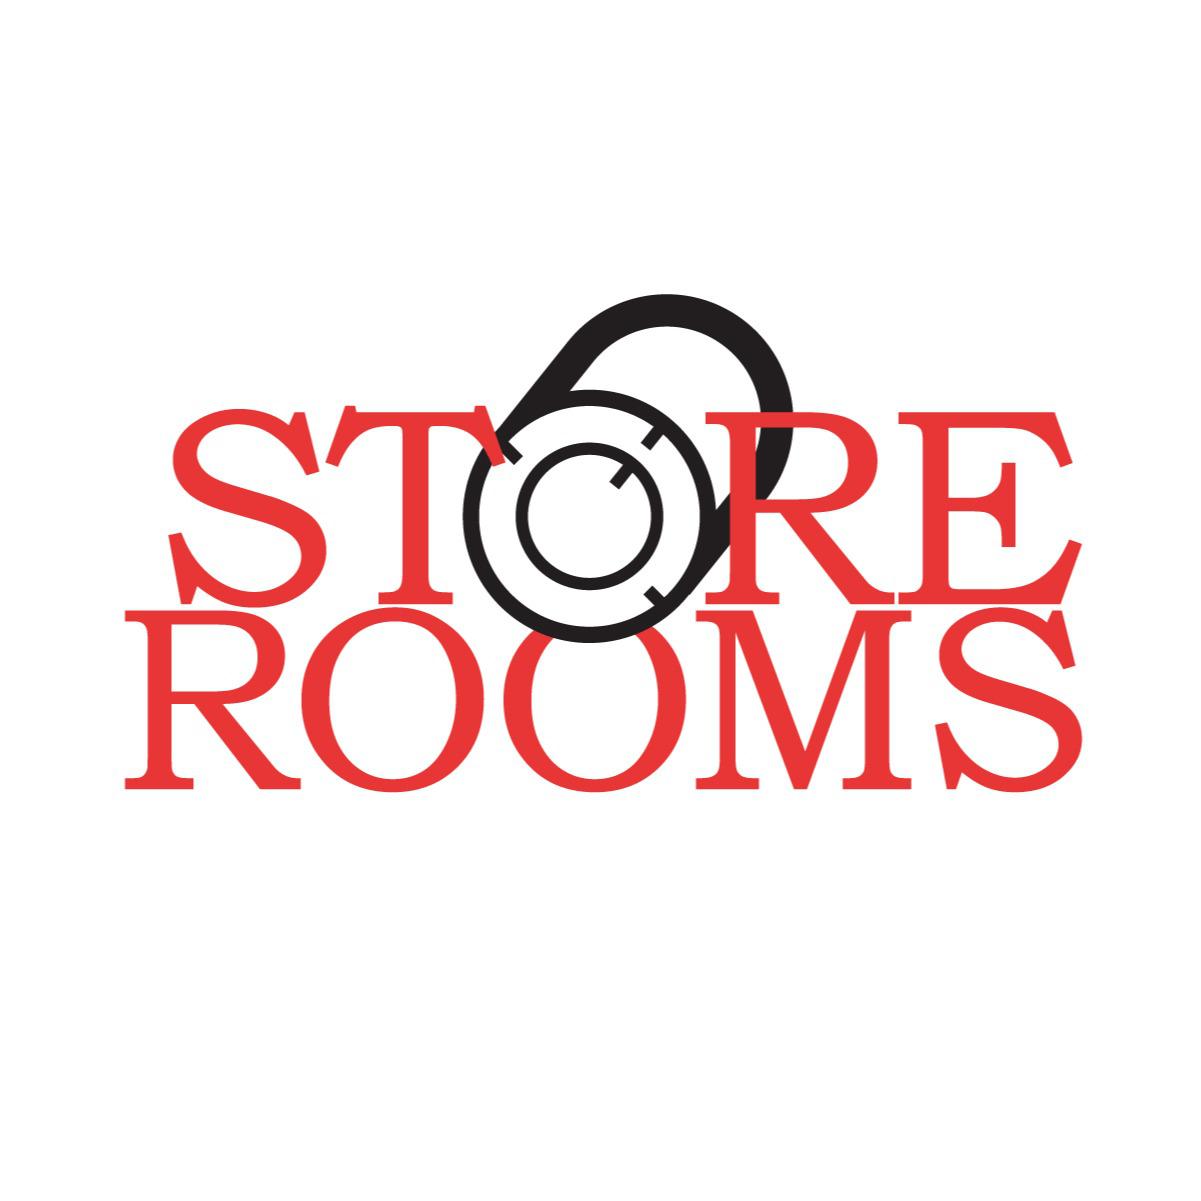 Store Rooms Self Storage - Marlborough, MA 01752 - (508)802-5160 | ShowMeLocal.com